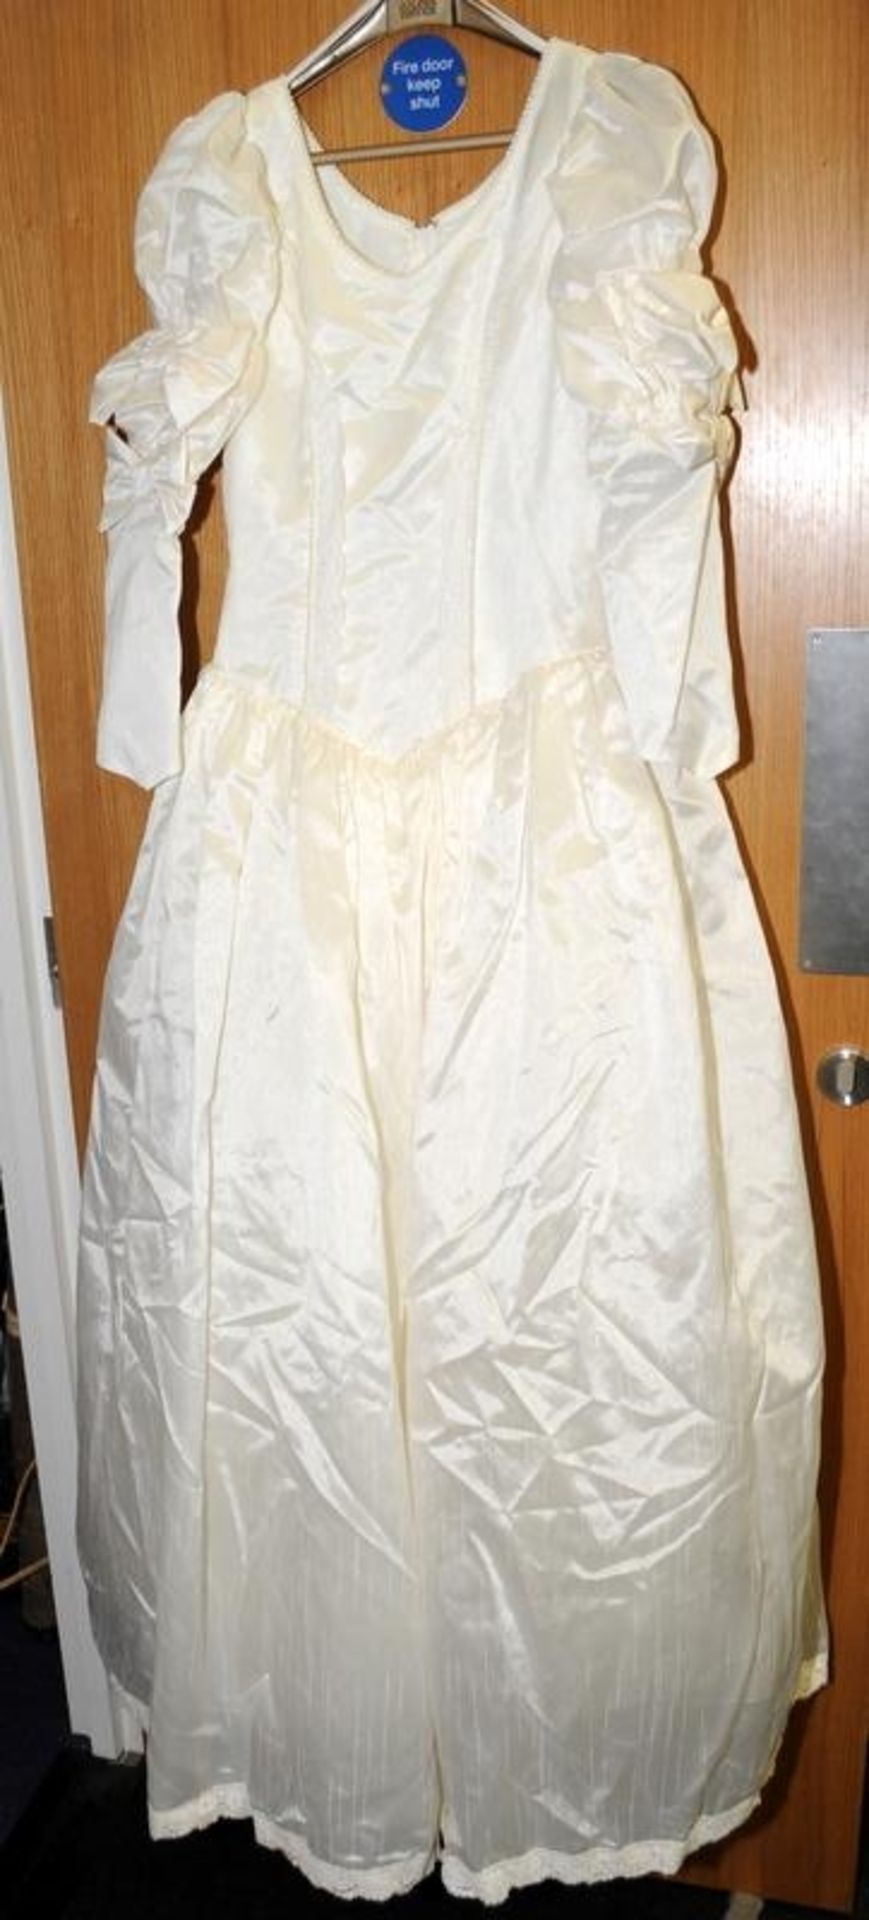 Ivory wedding dress by Berketex size 12, supplied in a Harrods box